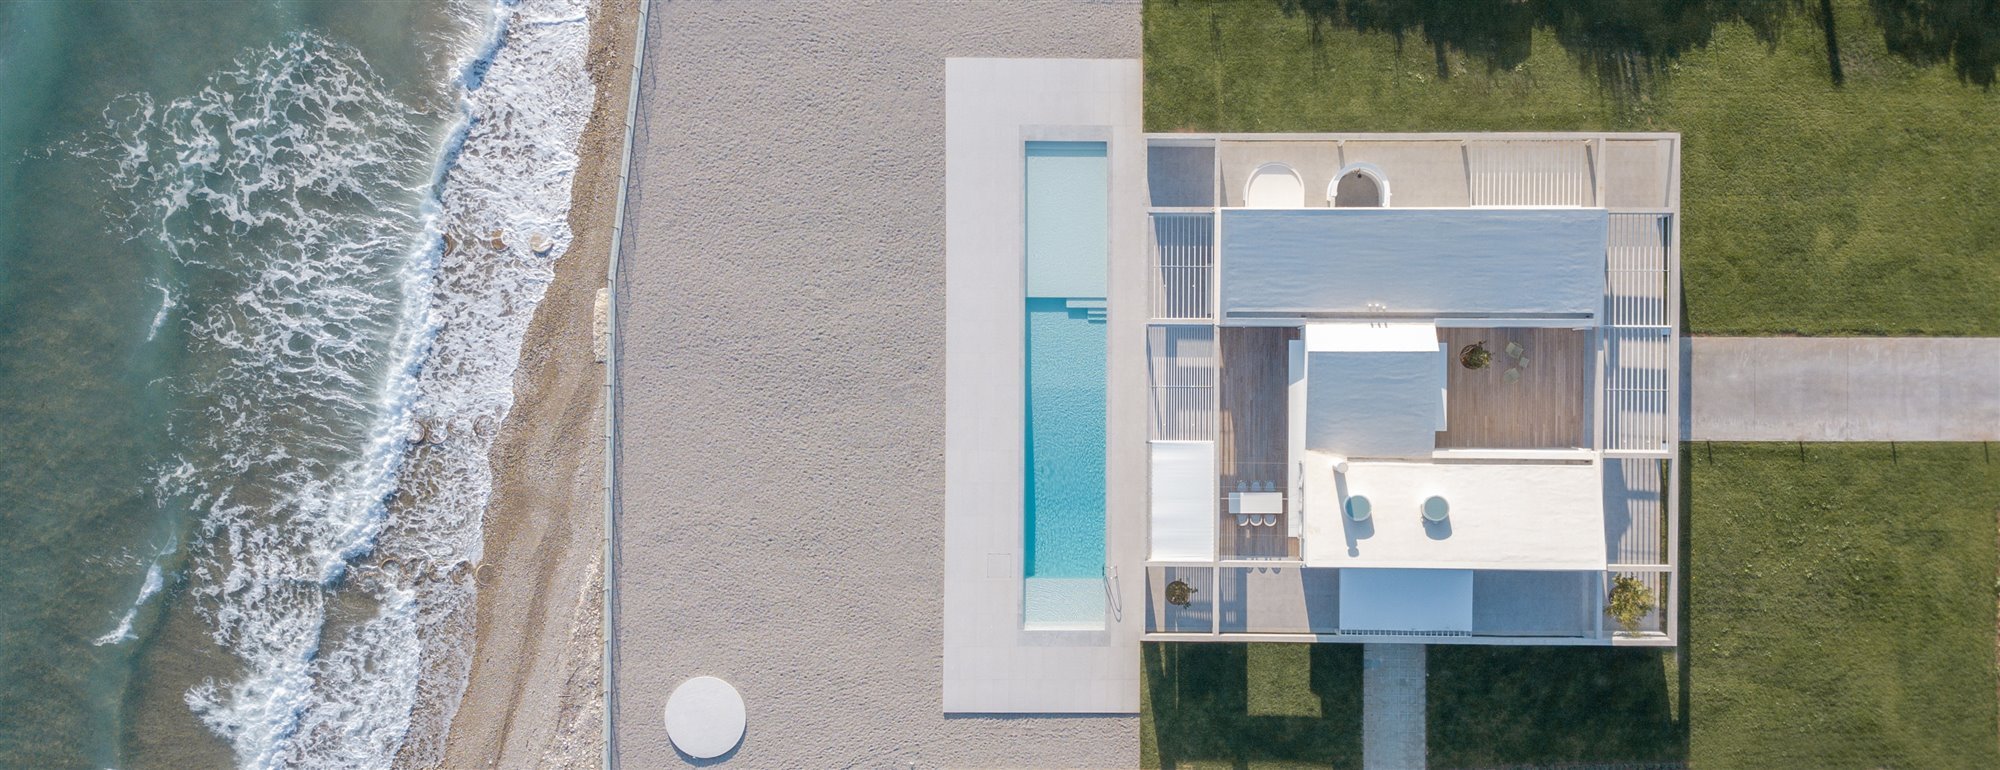 vista-aerea-dron-de-una-casa-con-piscina-a-pie-de-playa fbec0a3e 2000x770